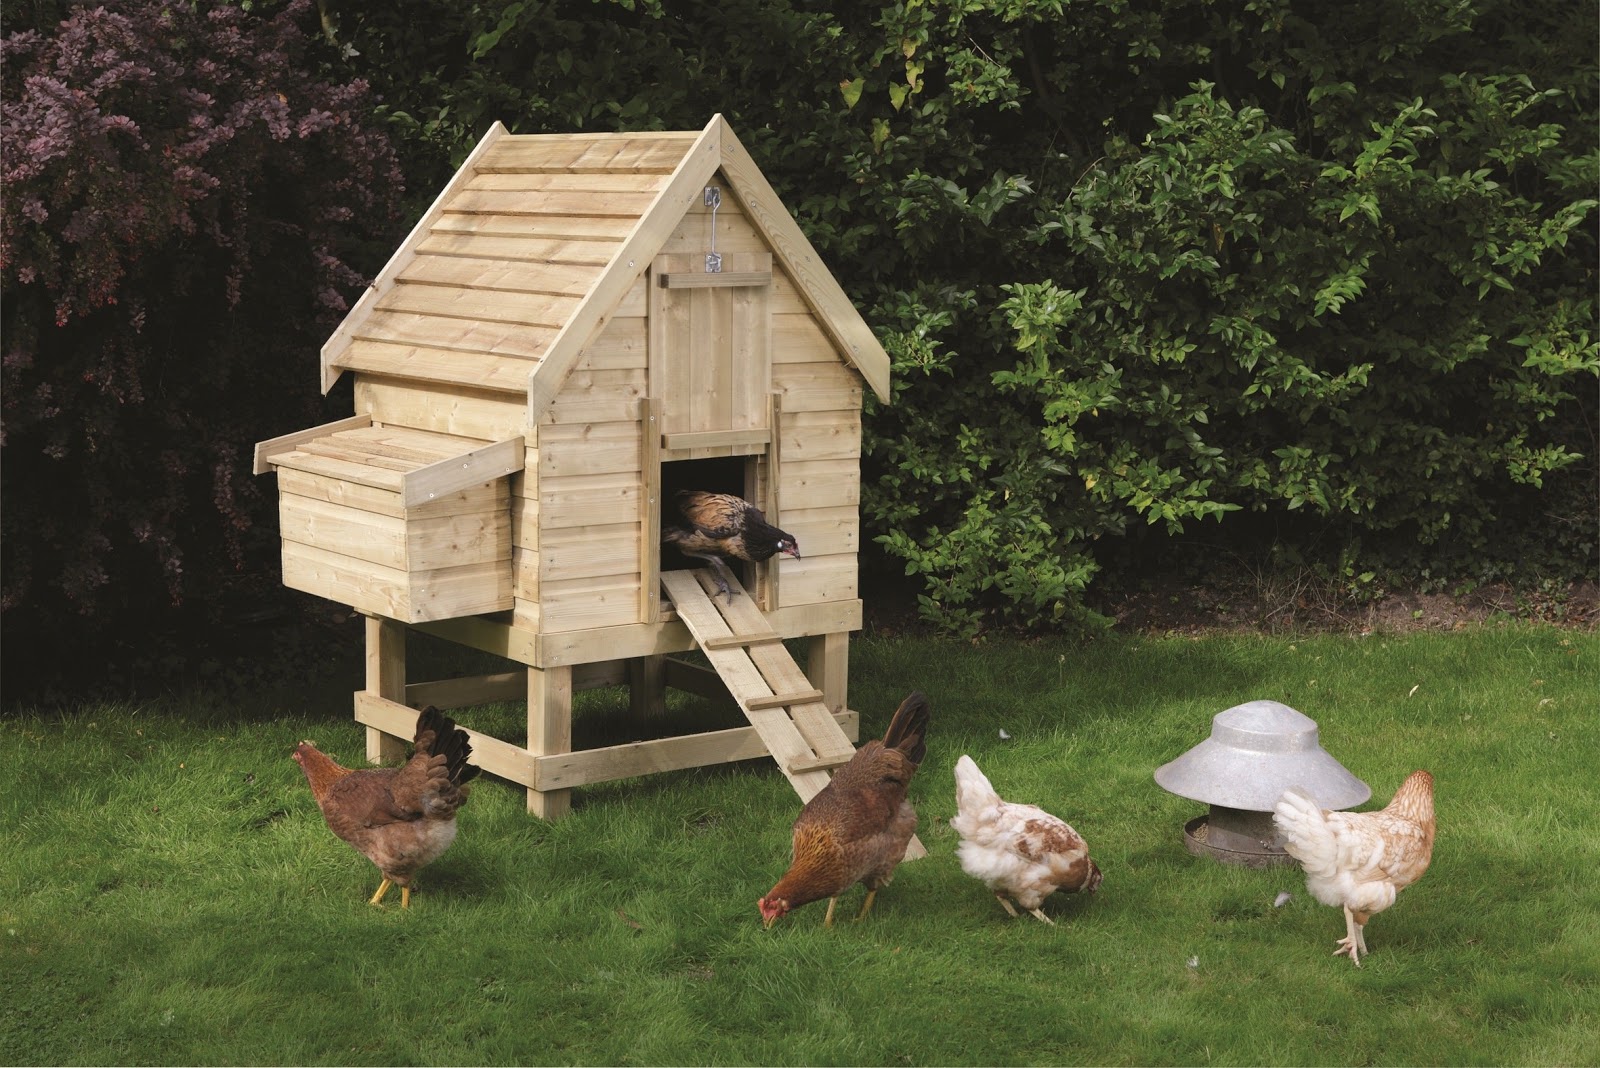 How To Build A Chicken Coop: Chicken Coops Designs - Chicken Coop Plans For 12 Chickens BackyarD Chicken Coop Designs